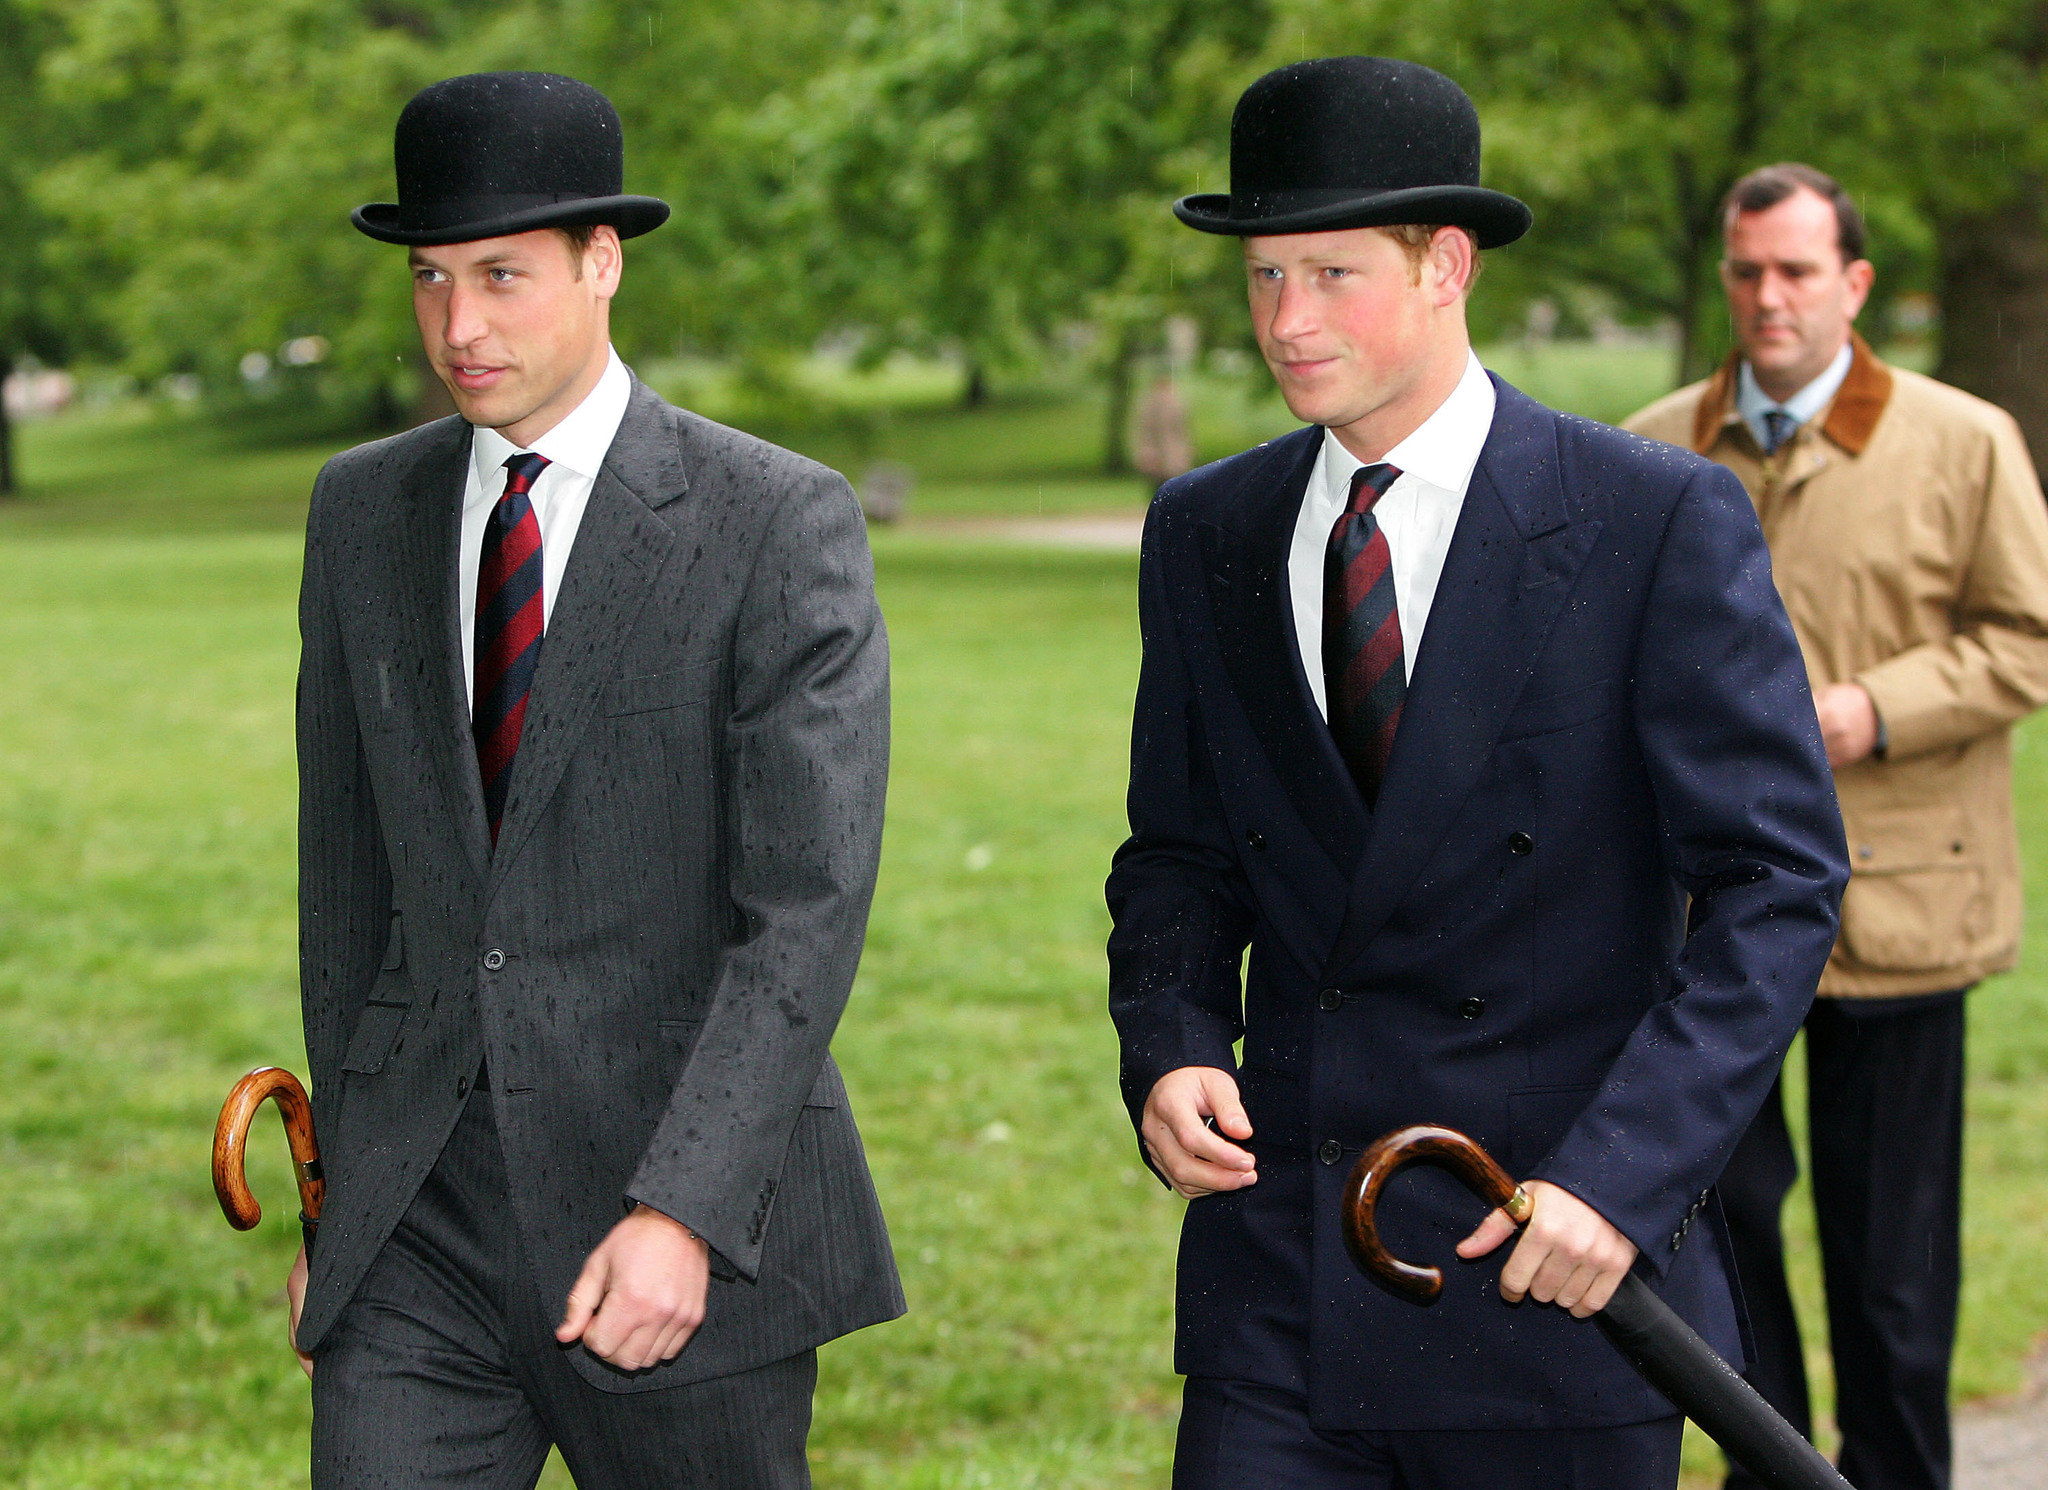 Prince Harry Windsor and Prince William